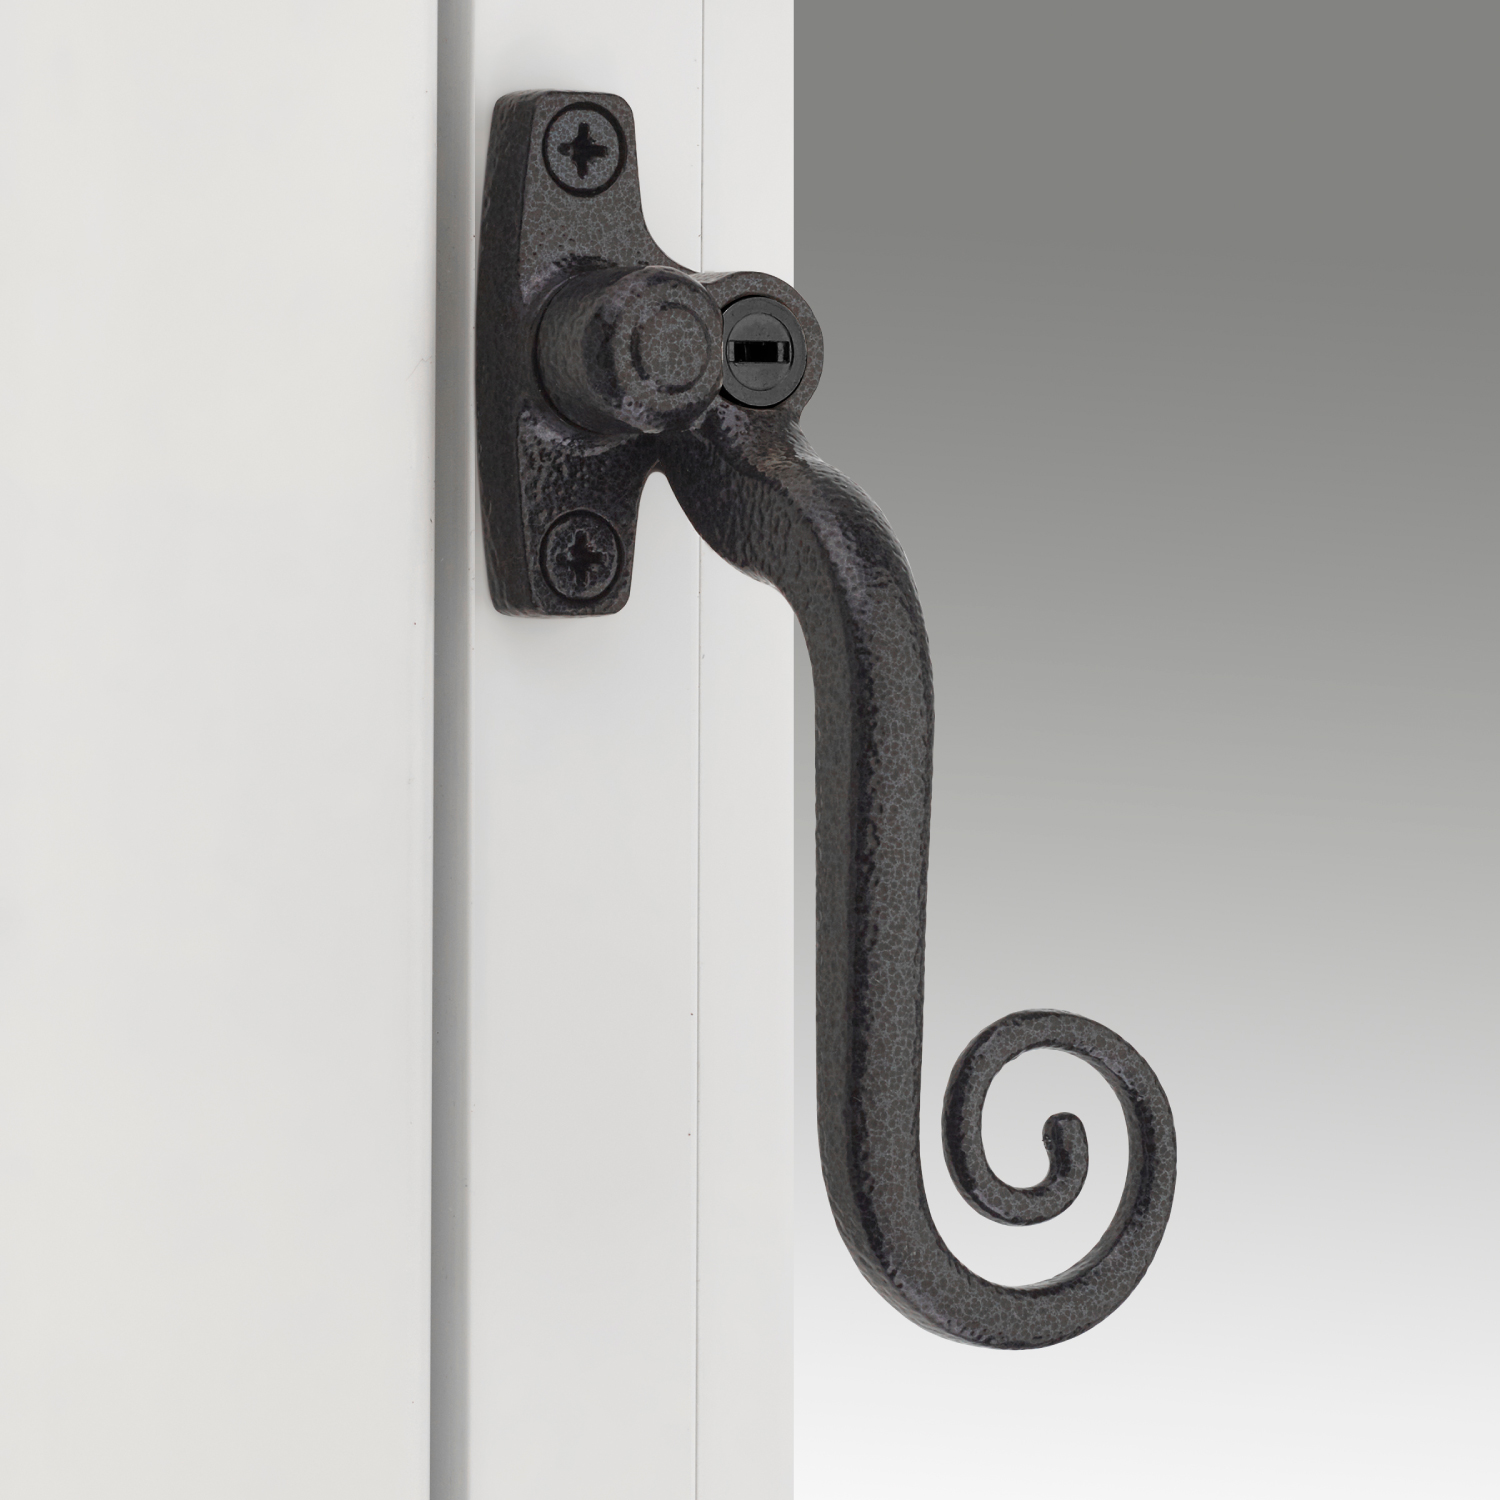 ERA has launched a new range of 19th-century ironmongery-inspired window handles.